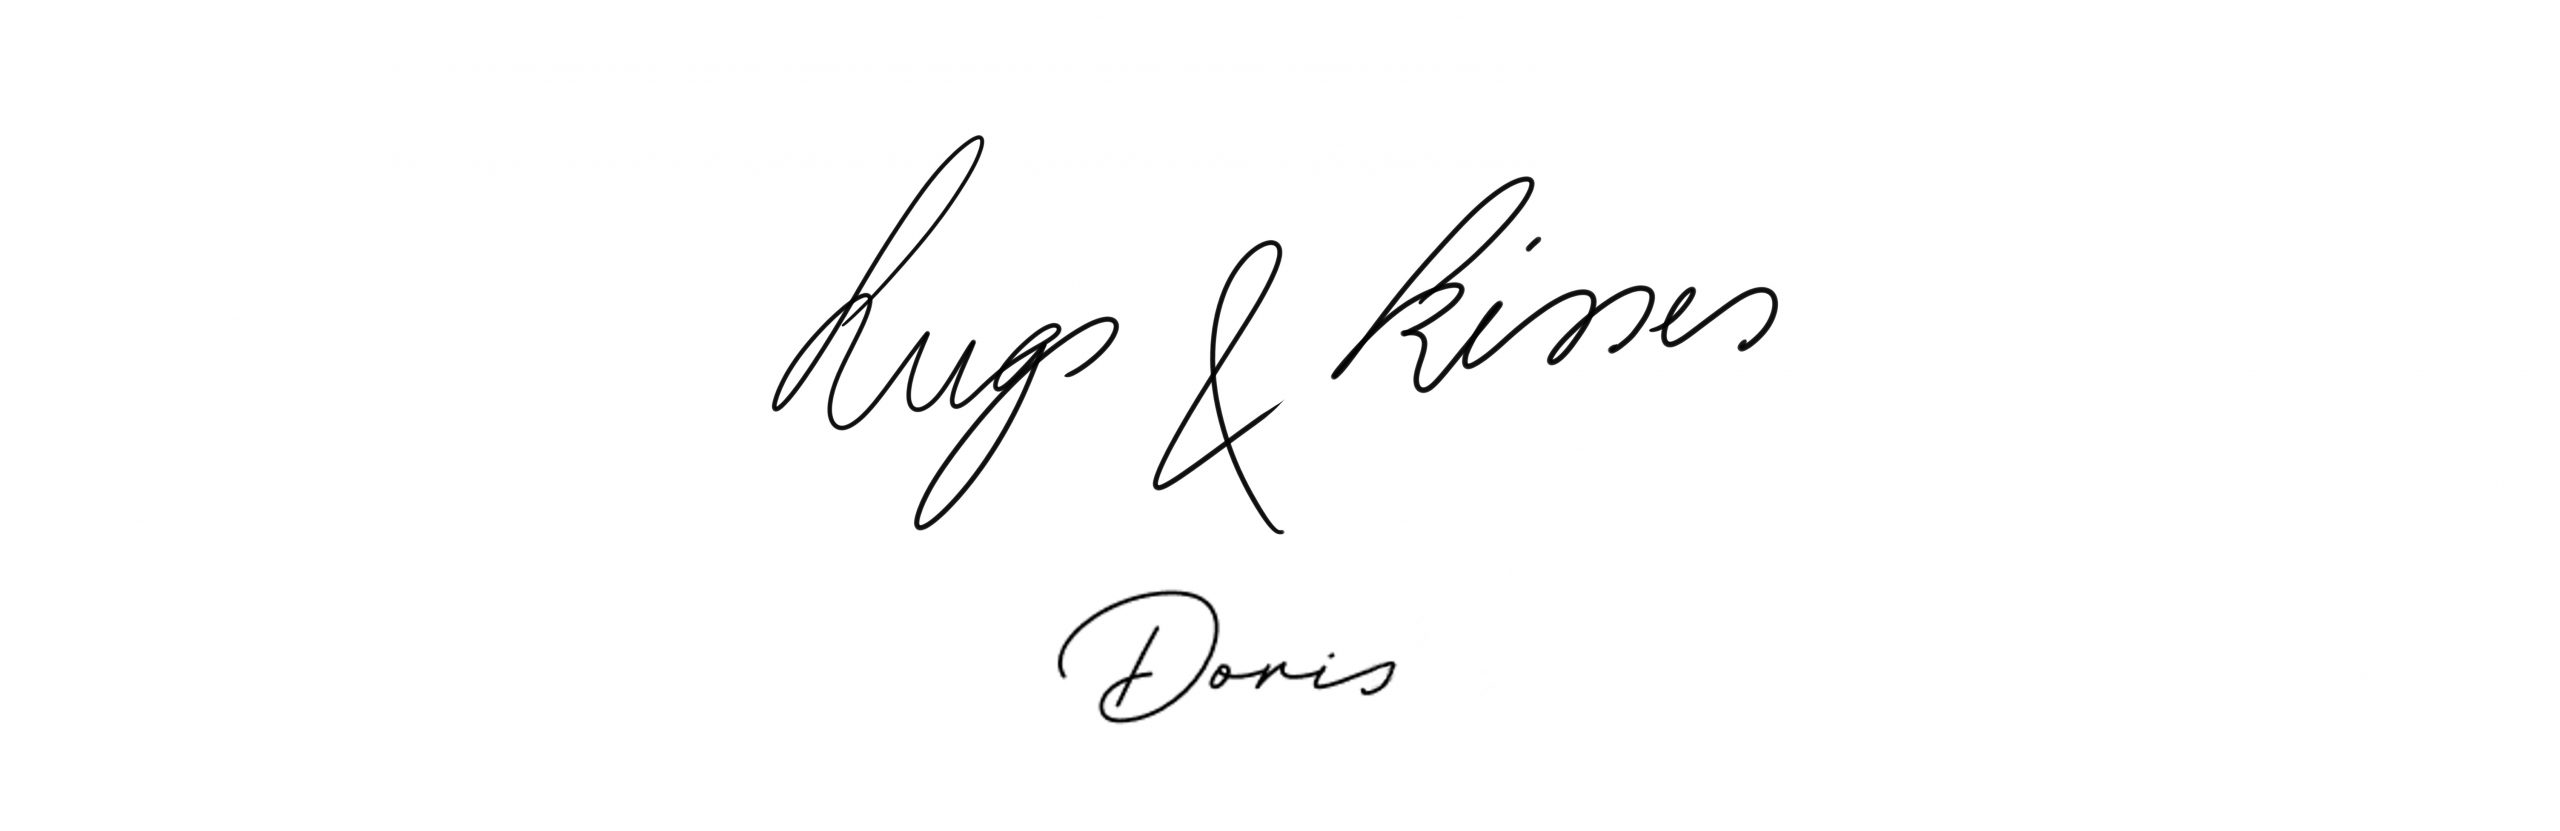 CF Signature hugs and kisses